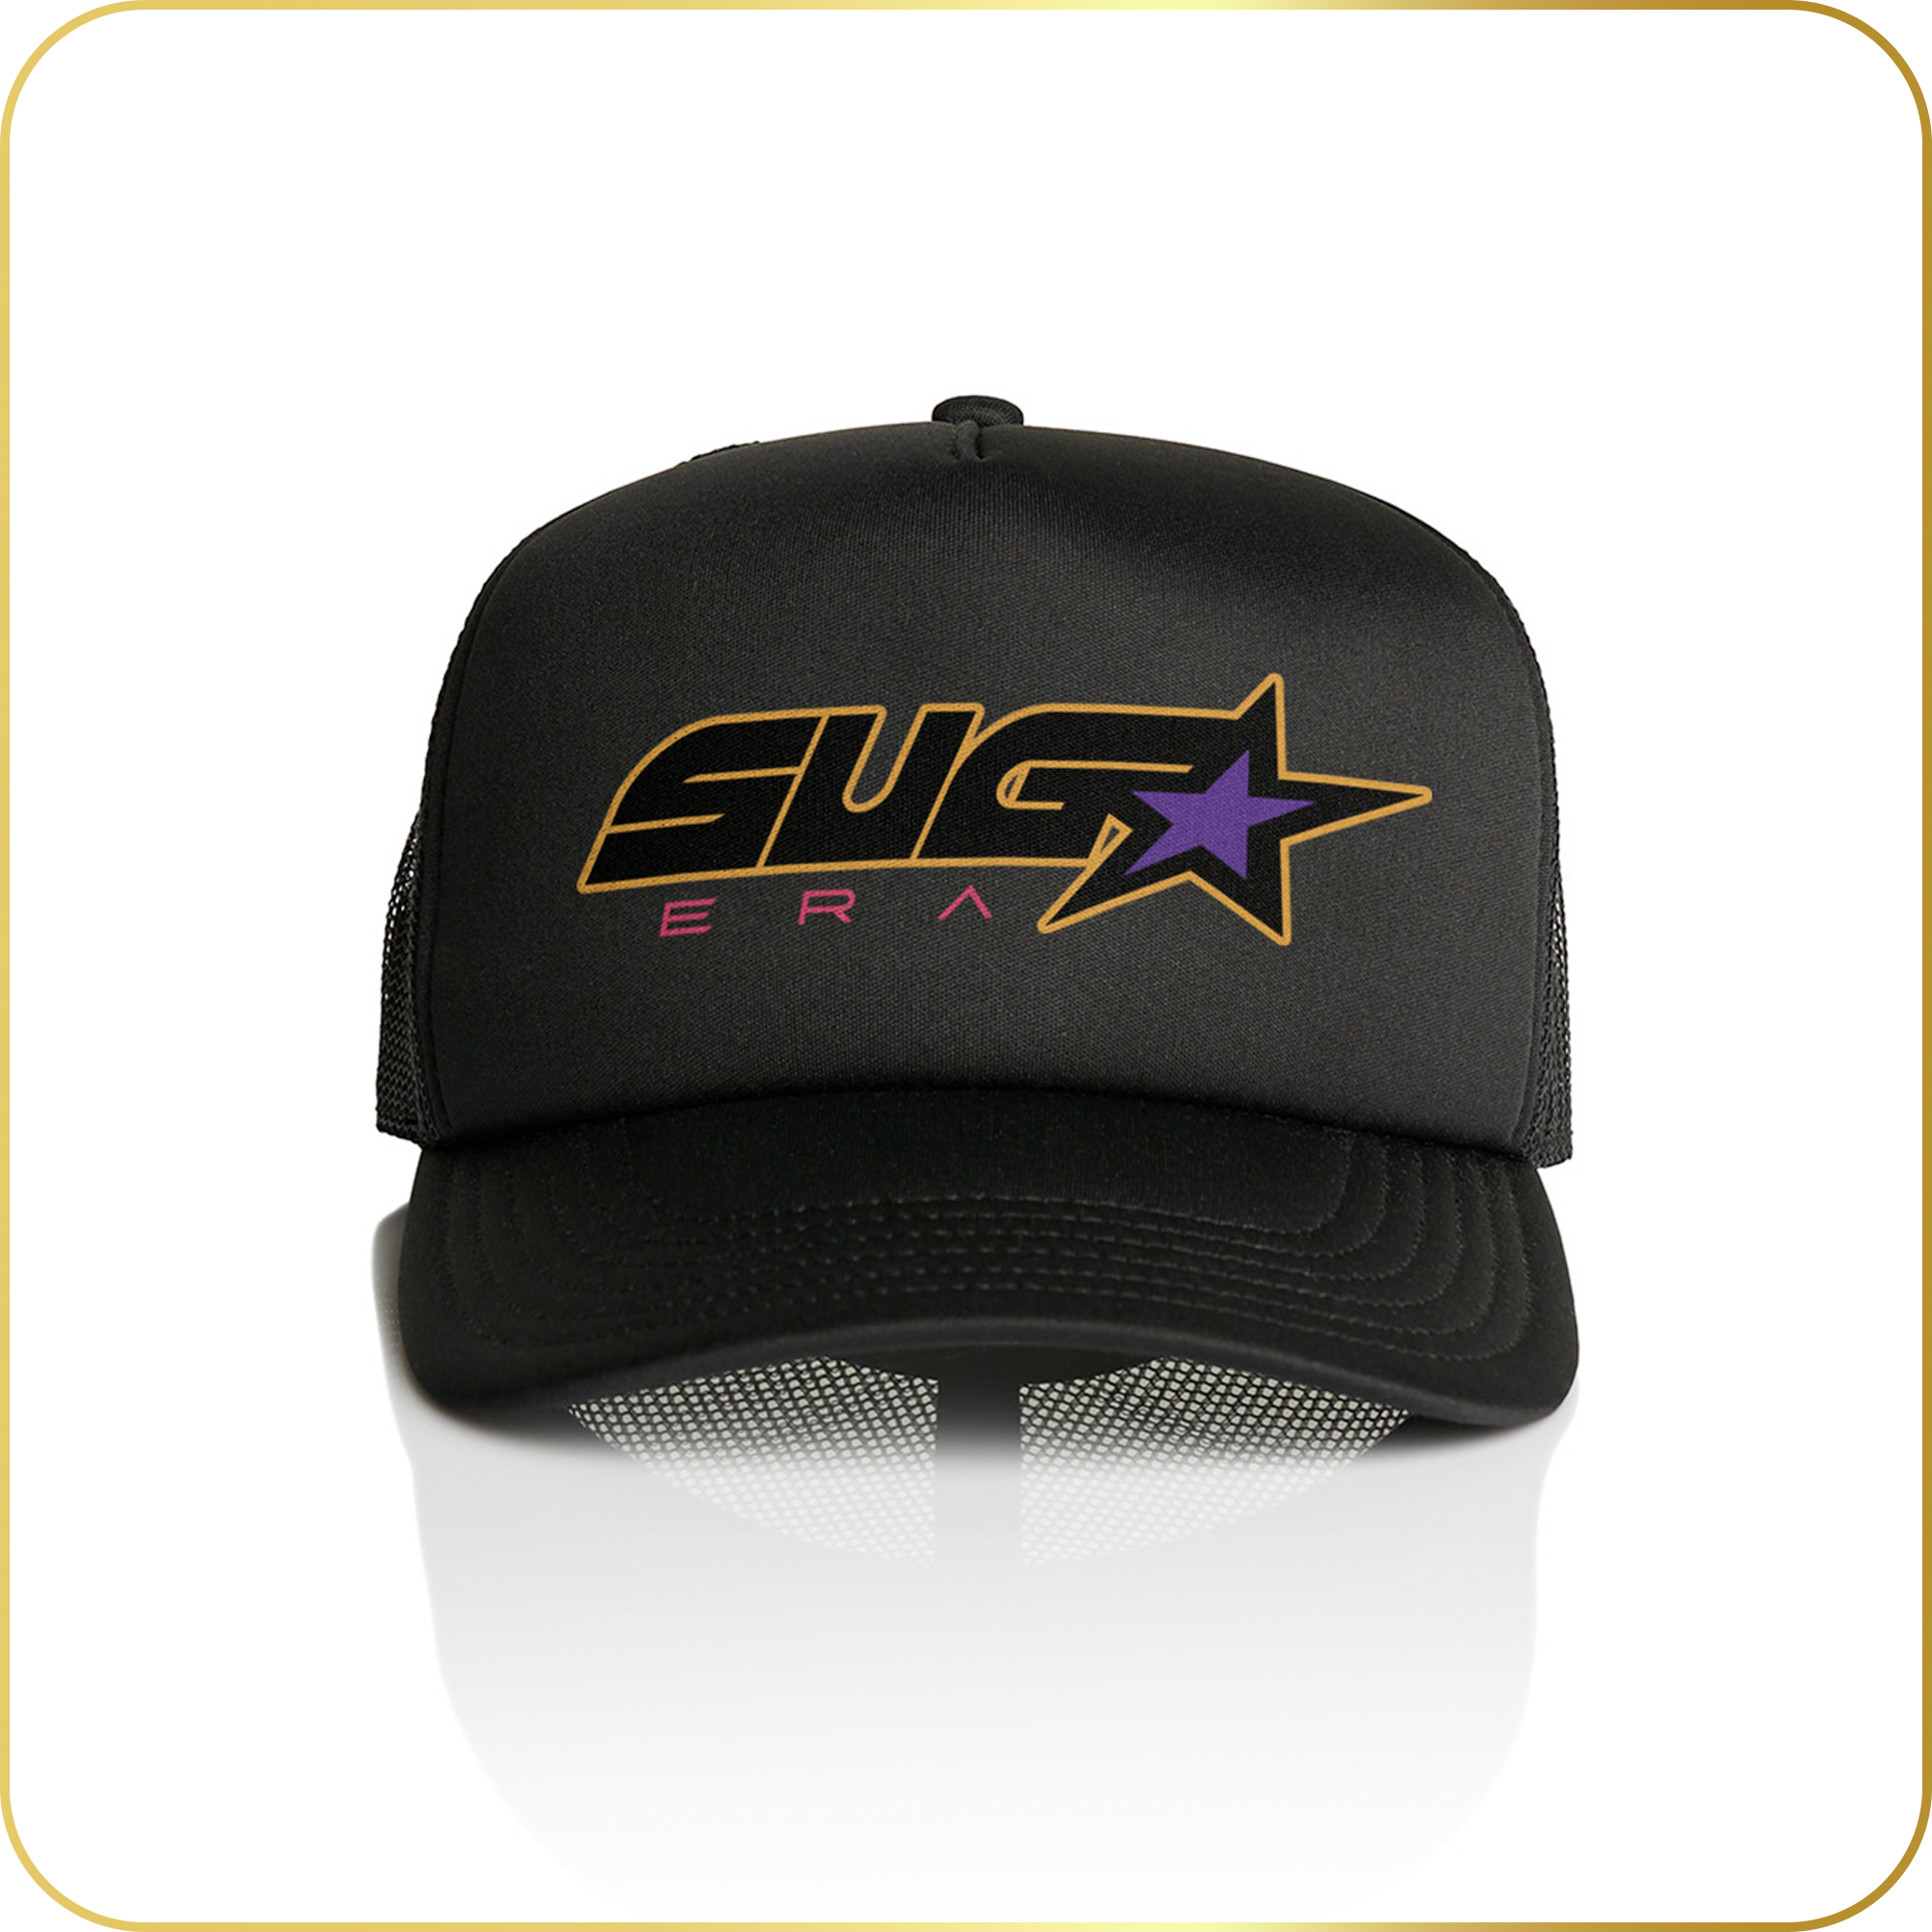 S1 Black Trucker Hat